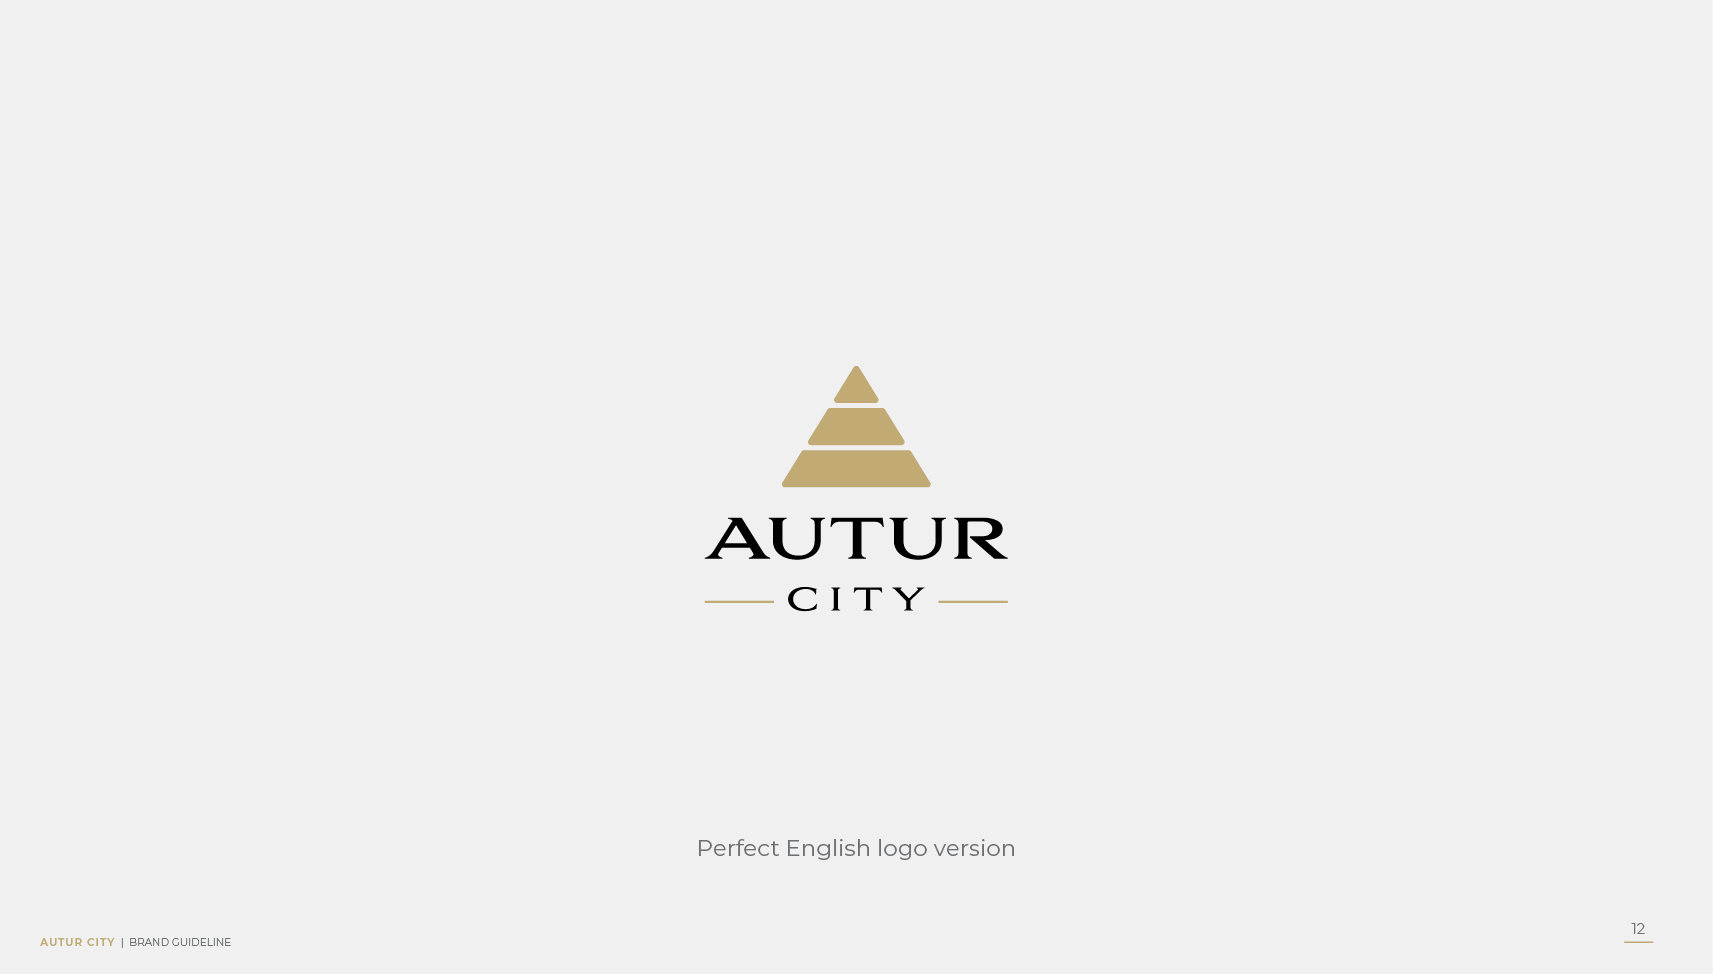 Autut City Brand Guideline12